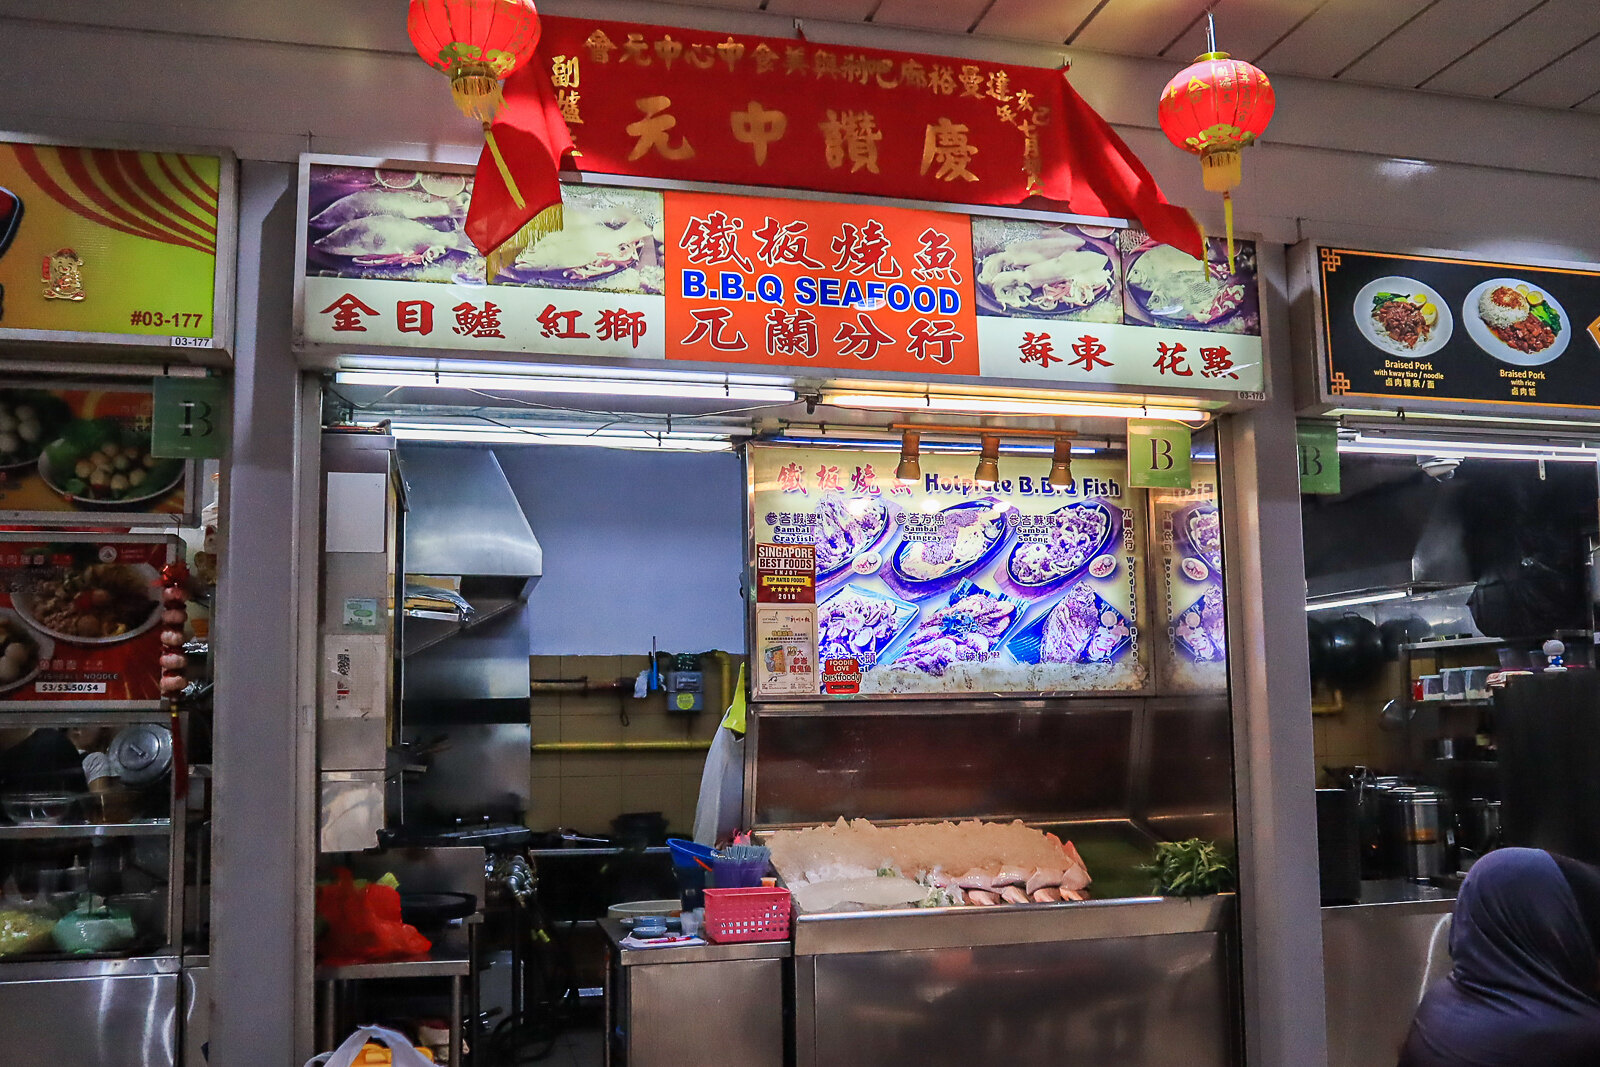 Taman Jurong Market and Food Centre - BBQ seafood storefront